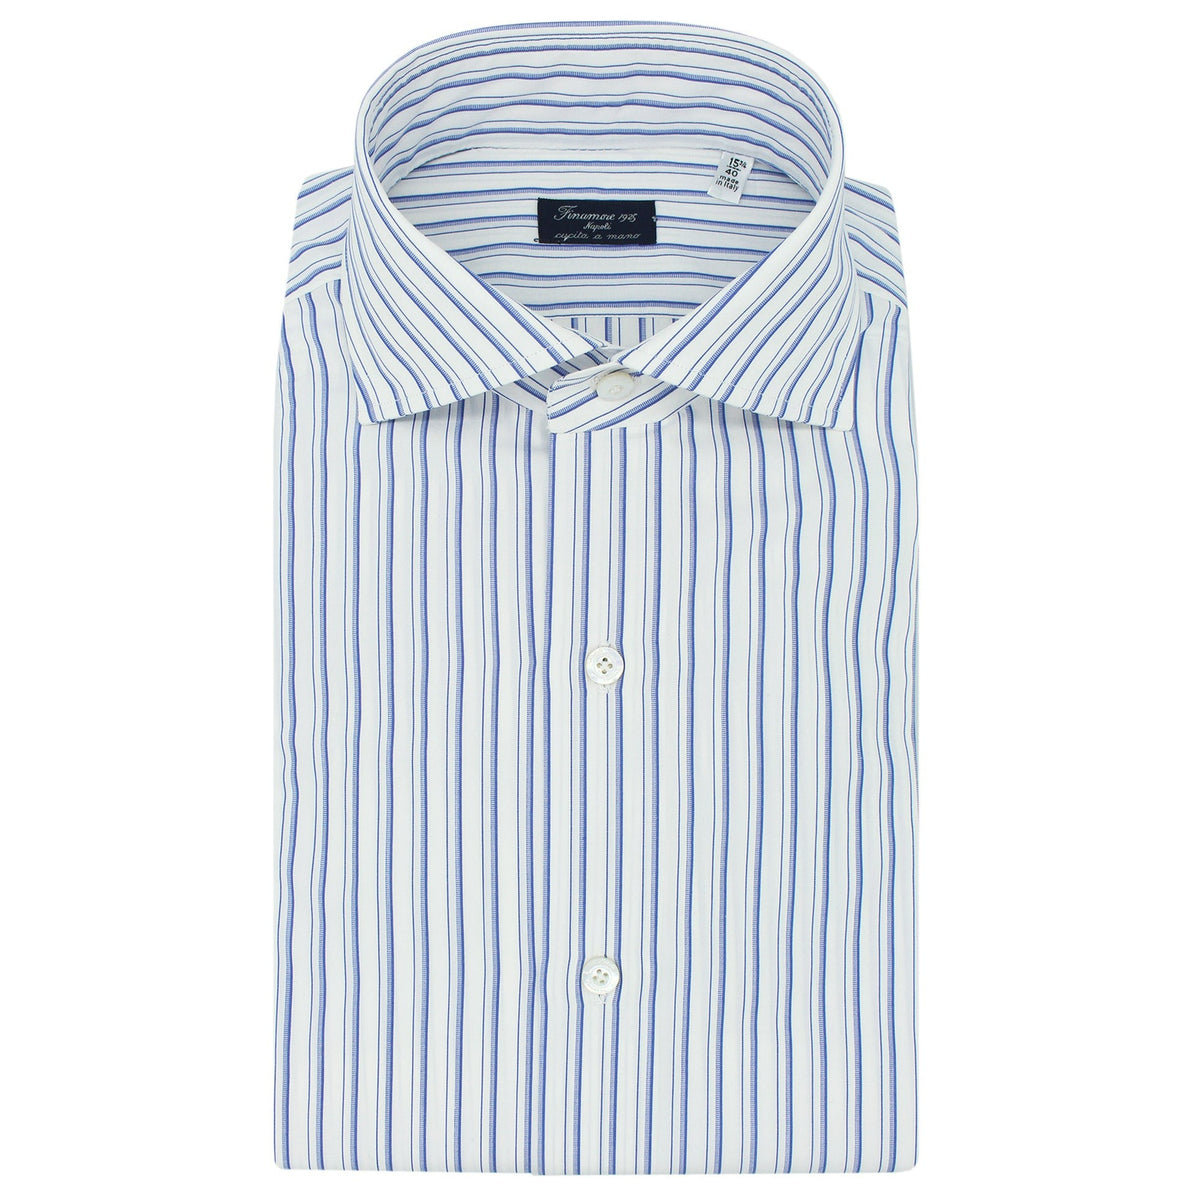 Classic Napoli shirt in light blue striped cotton, no "arriccio" at the shoulder